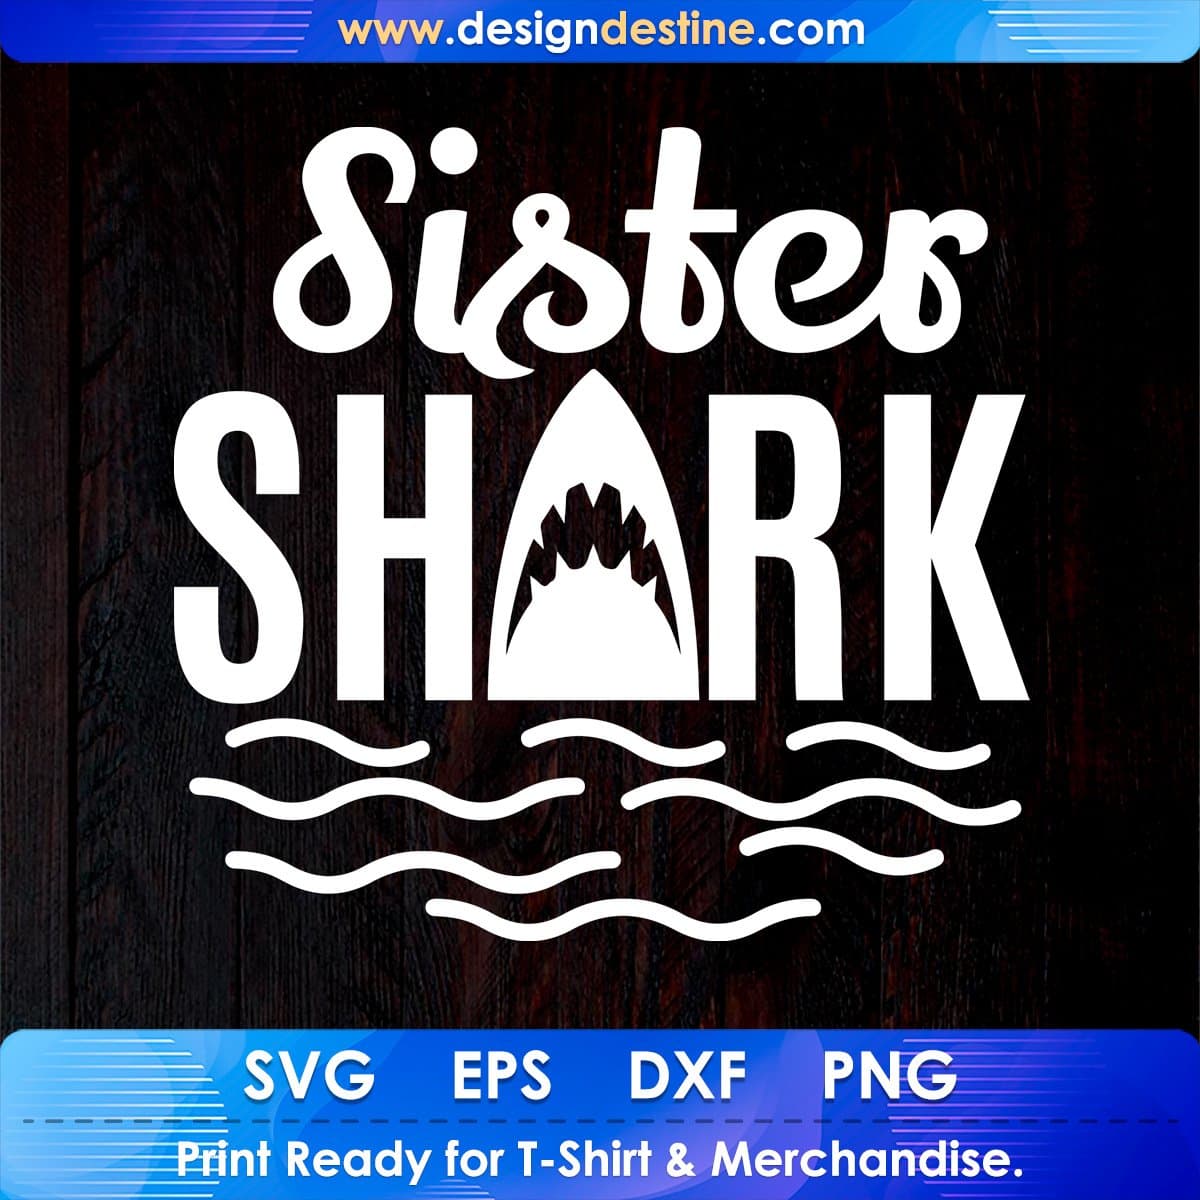 Sister Shark T shirt Design In Svg Cutting Printable Files